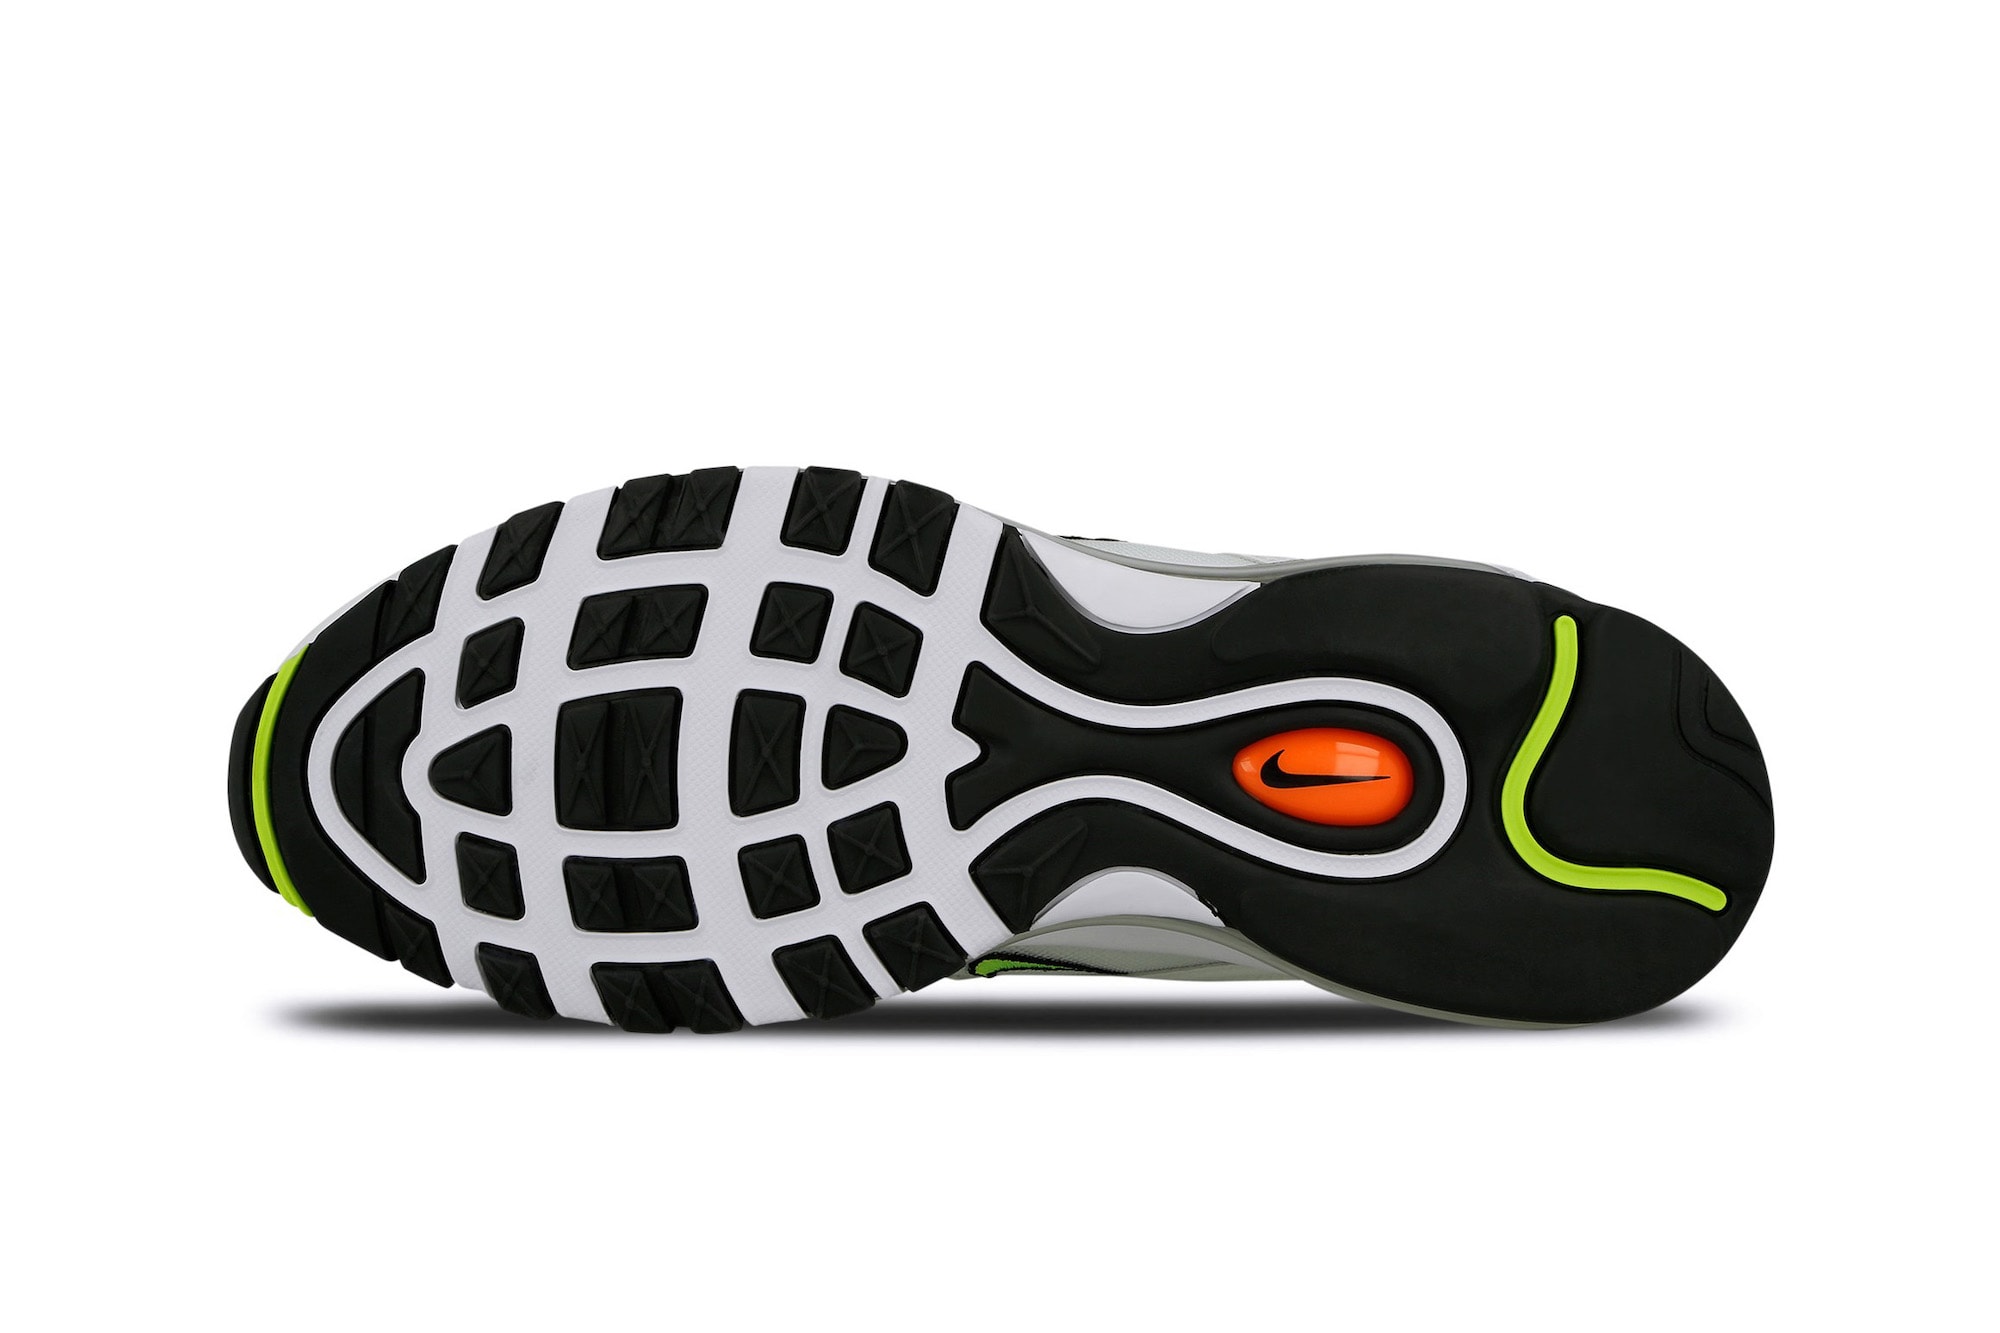 Nike Air Max 97 Air Max 270 "Volt" Pack Sneaker Shoe Neon Green Black White Design Trend